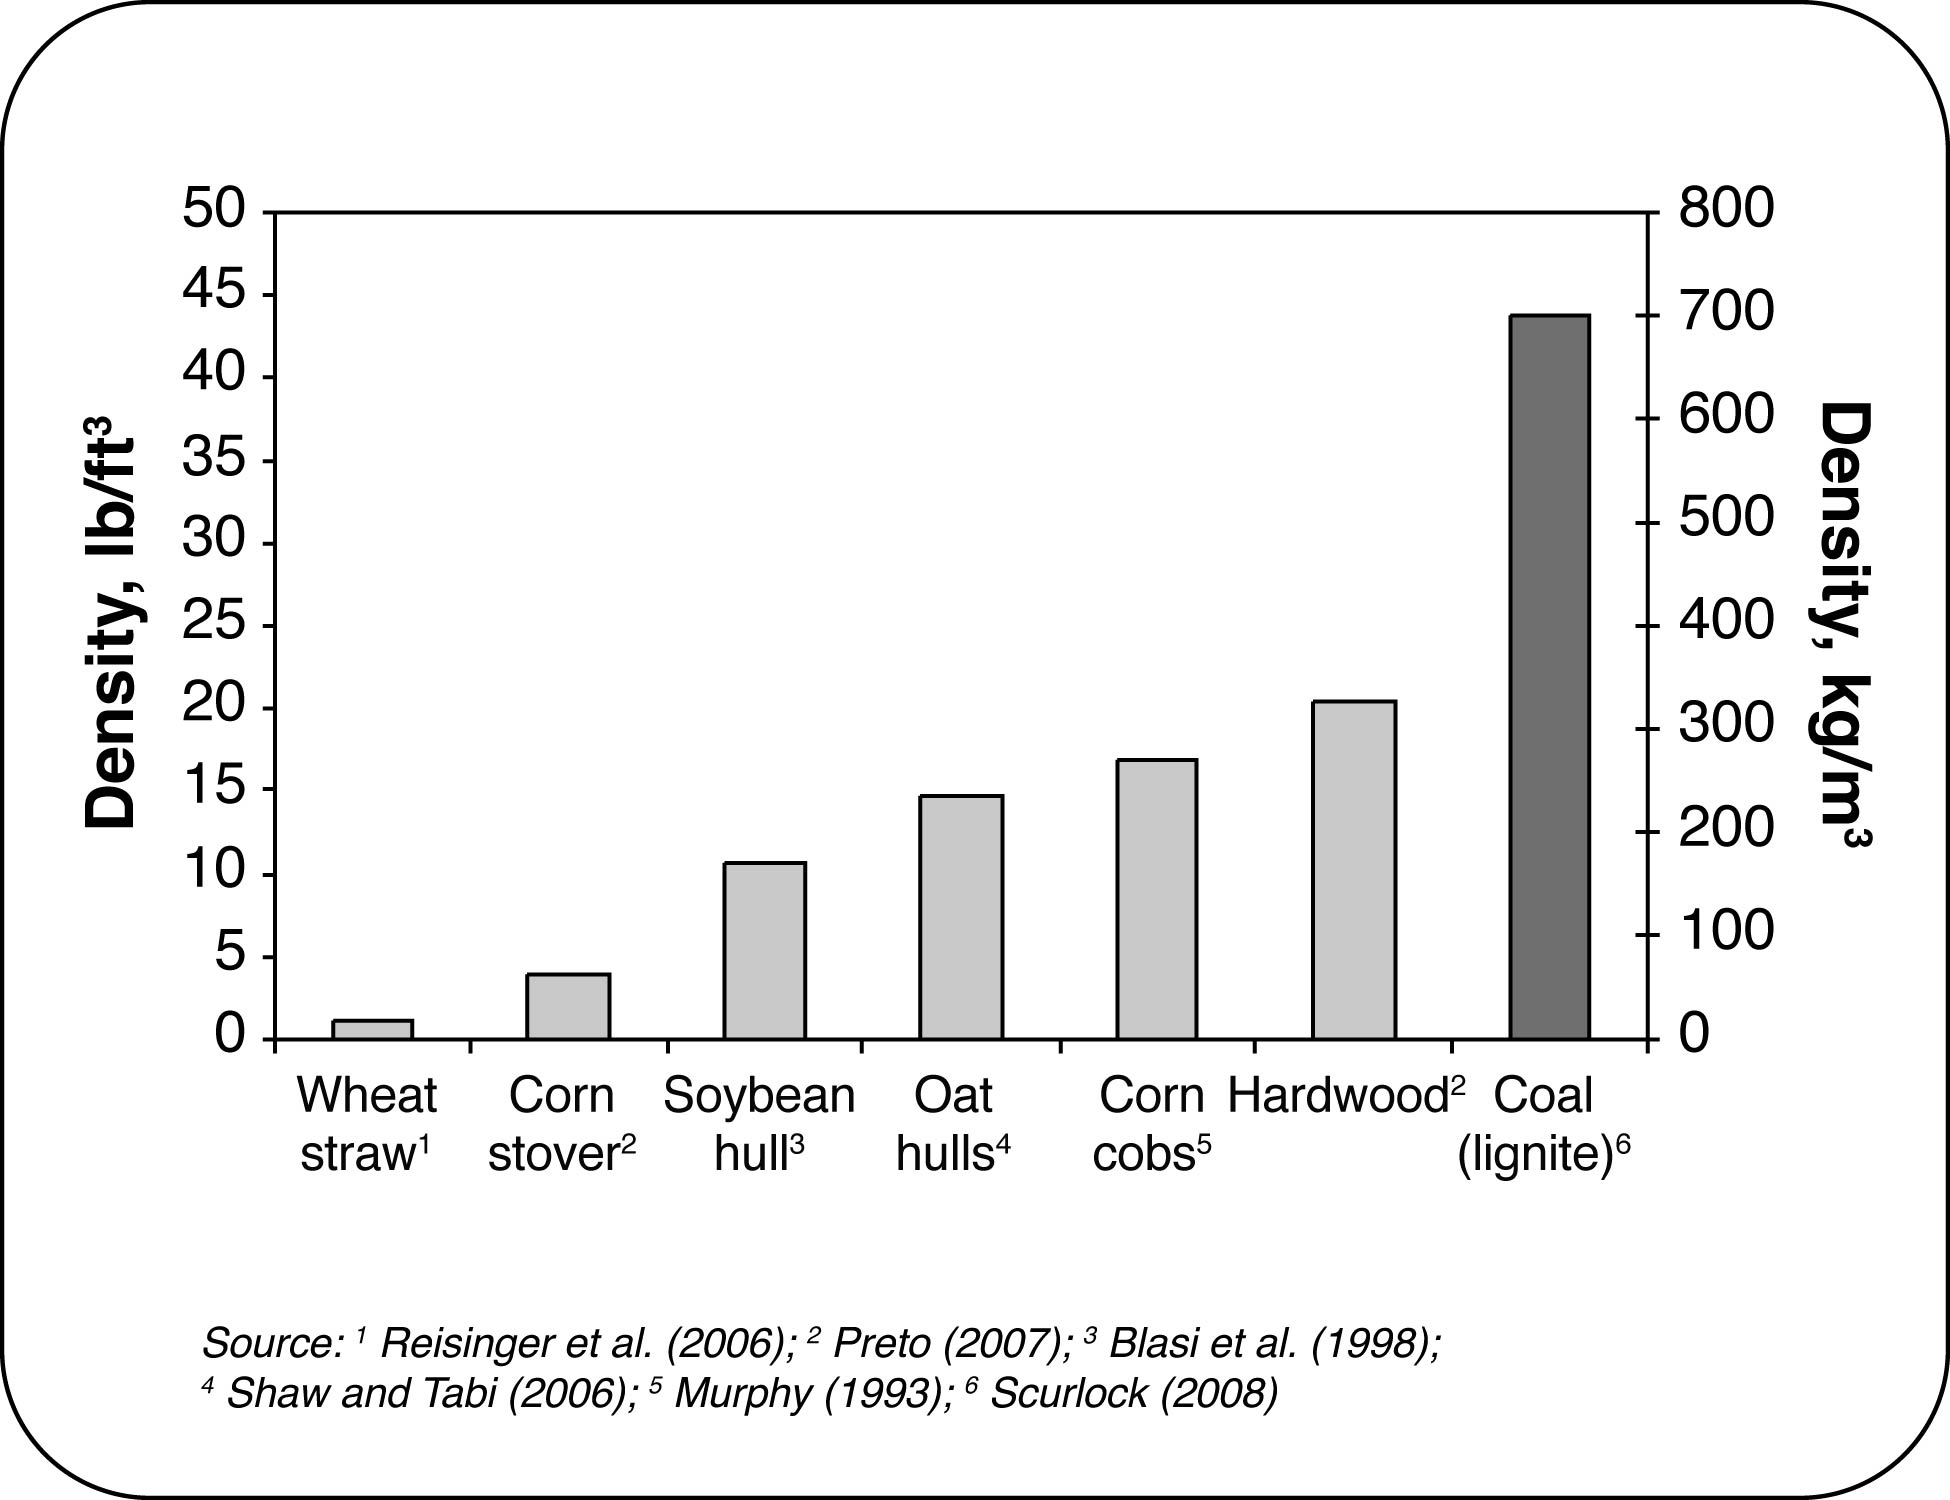 A bar chart showing the bulk densities of unprocessed biomass